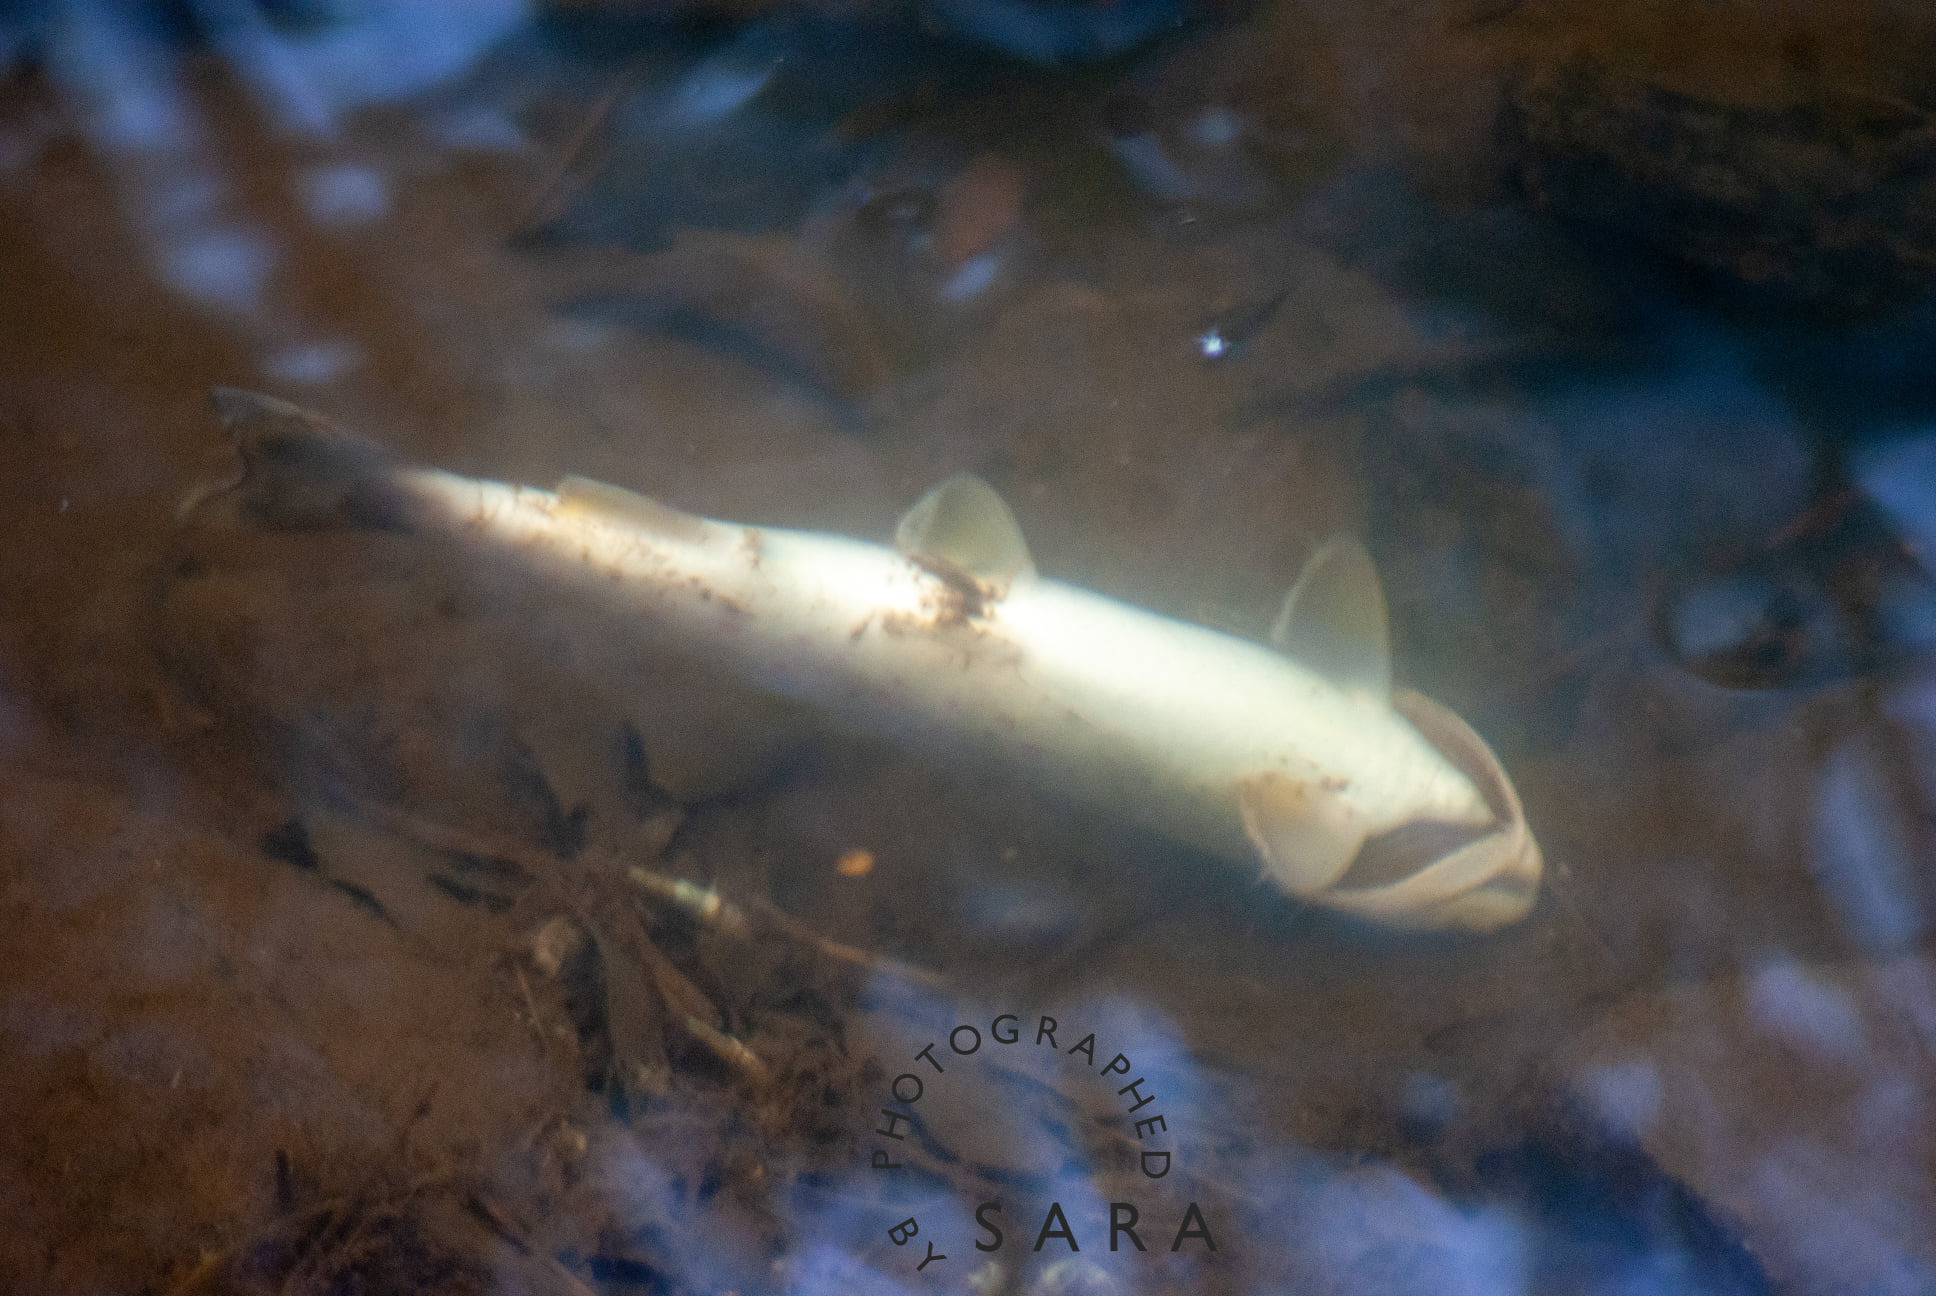 ‘Major’ slurry spill kills fish in Tyrone river